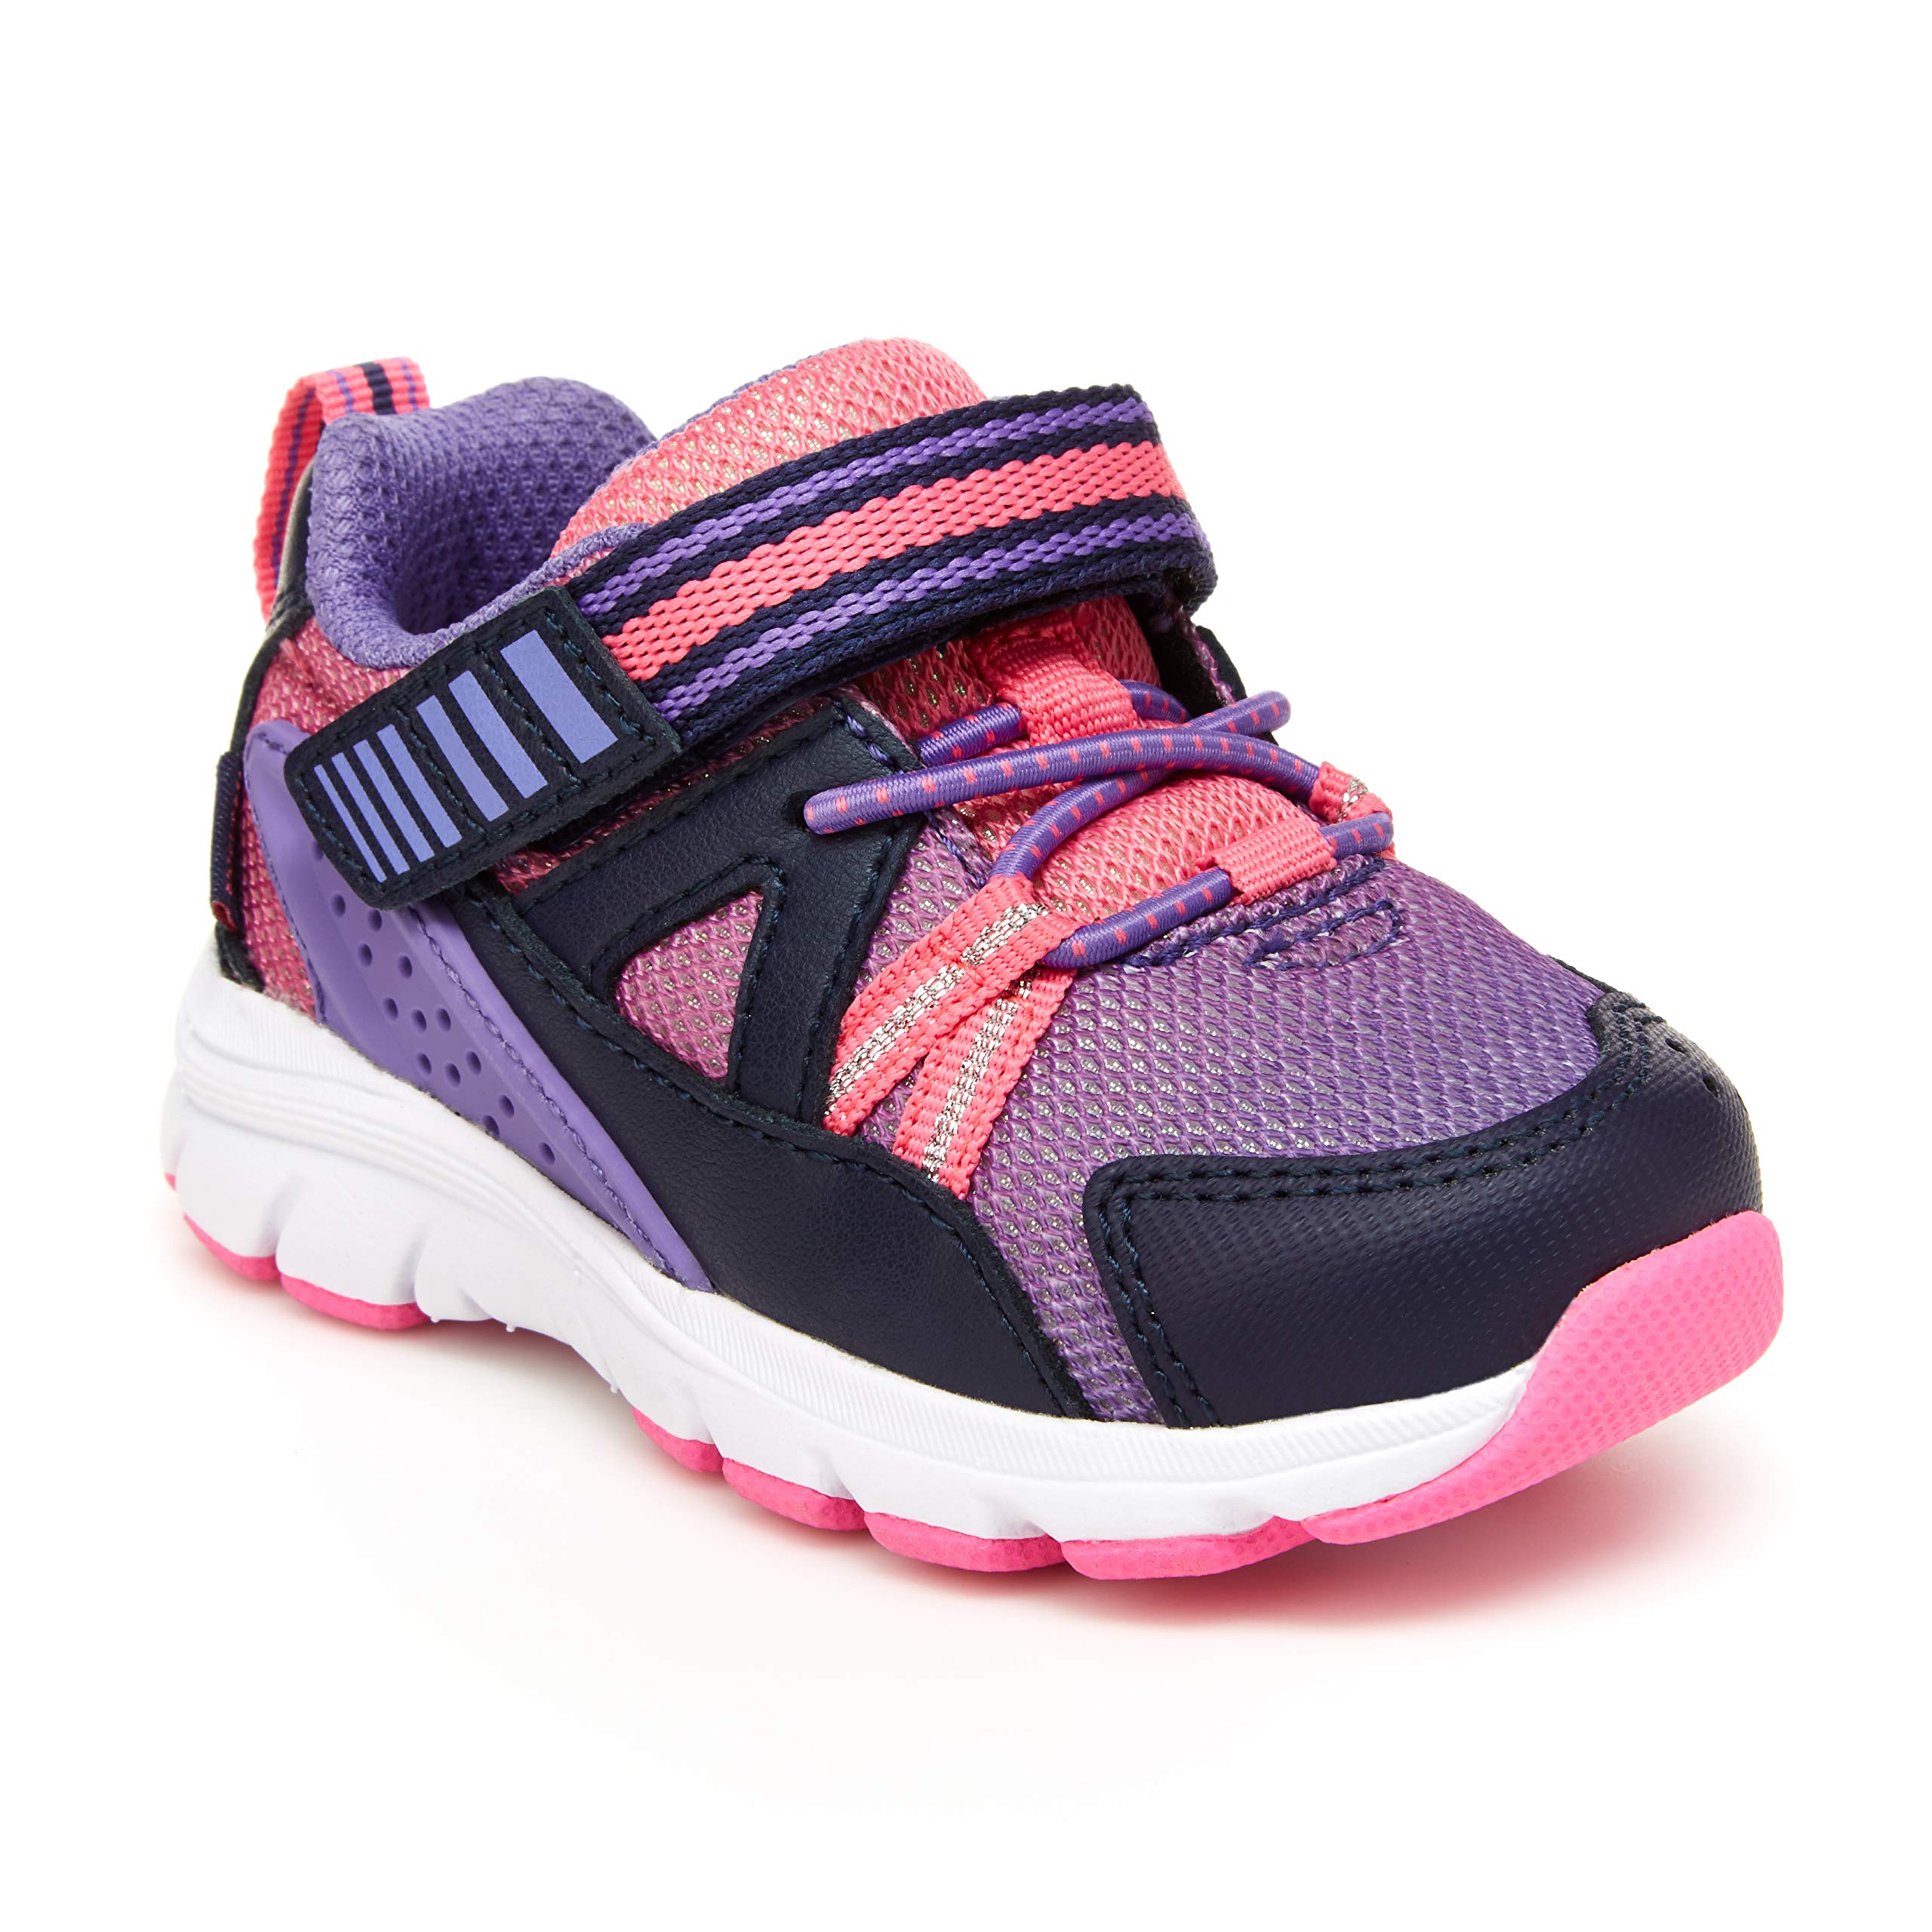 Stride Rite Unisex-Child M2p Journey Adaptable Athletic Sneaker